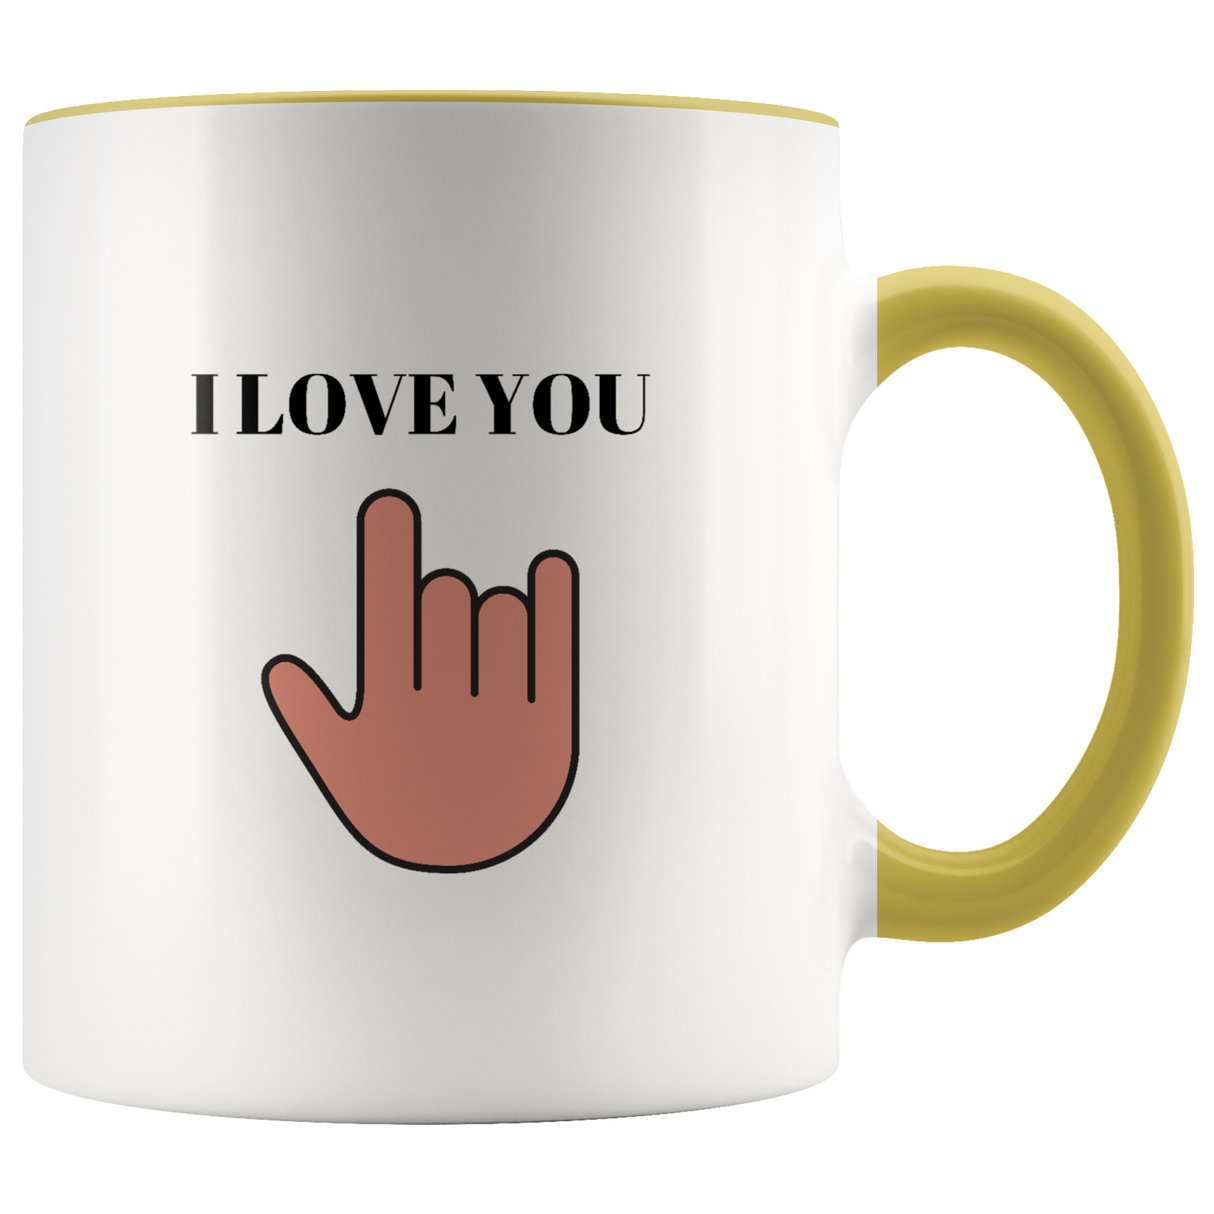 I Love You Mug Ceramic Accent Mug - Yellow | Shop Sassy Chick